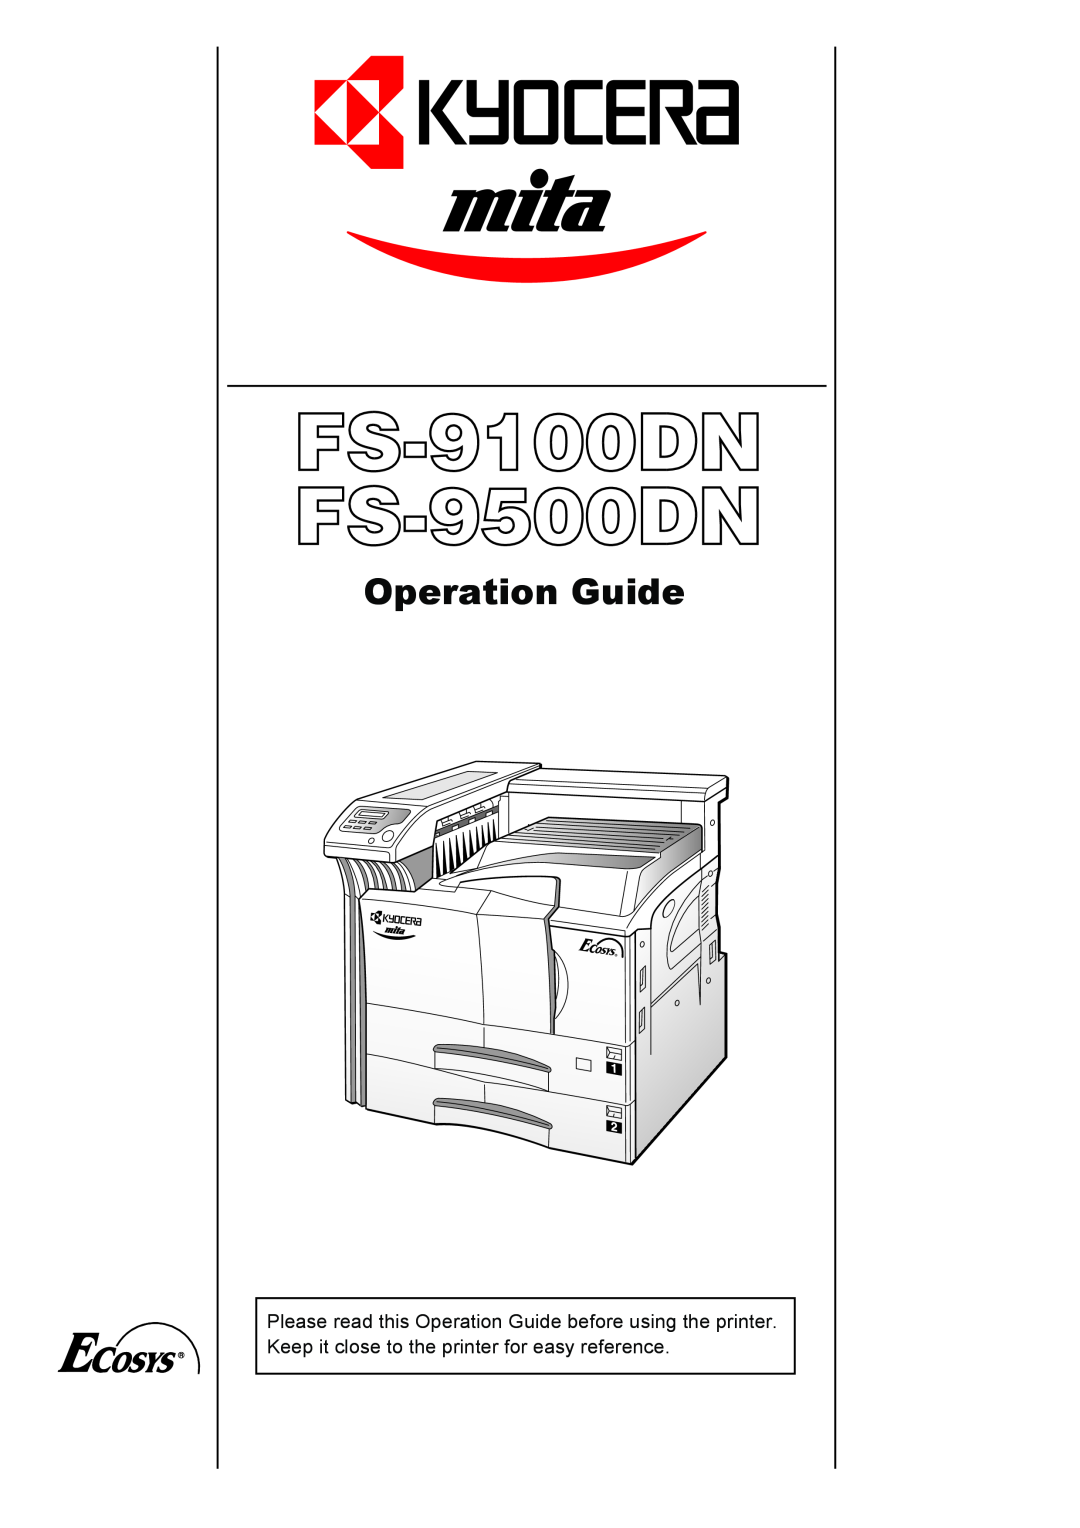 Kyocera S-9100DN manual Operation Guide 